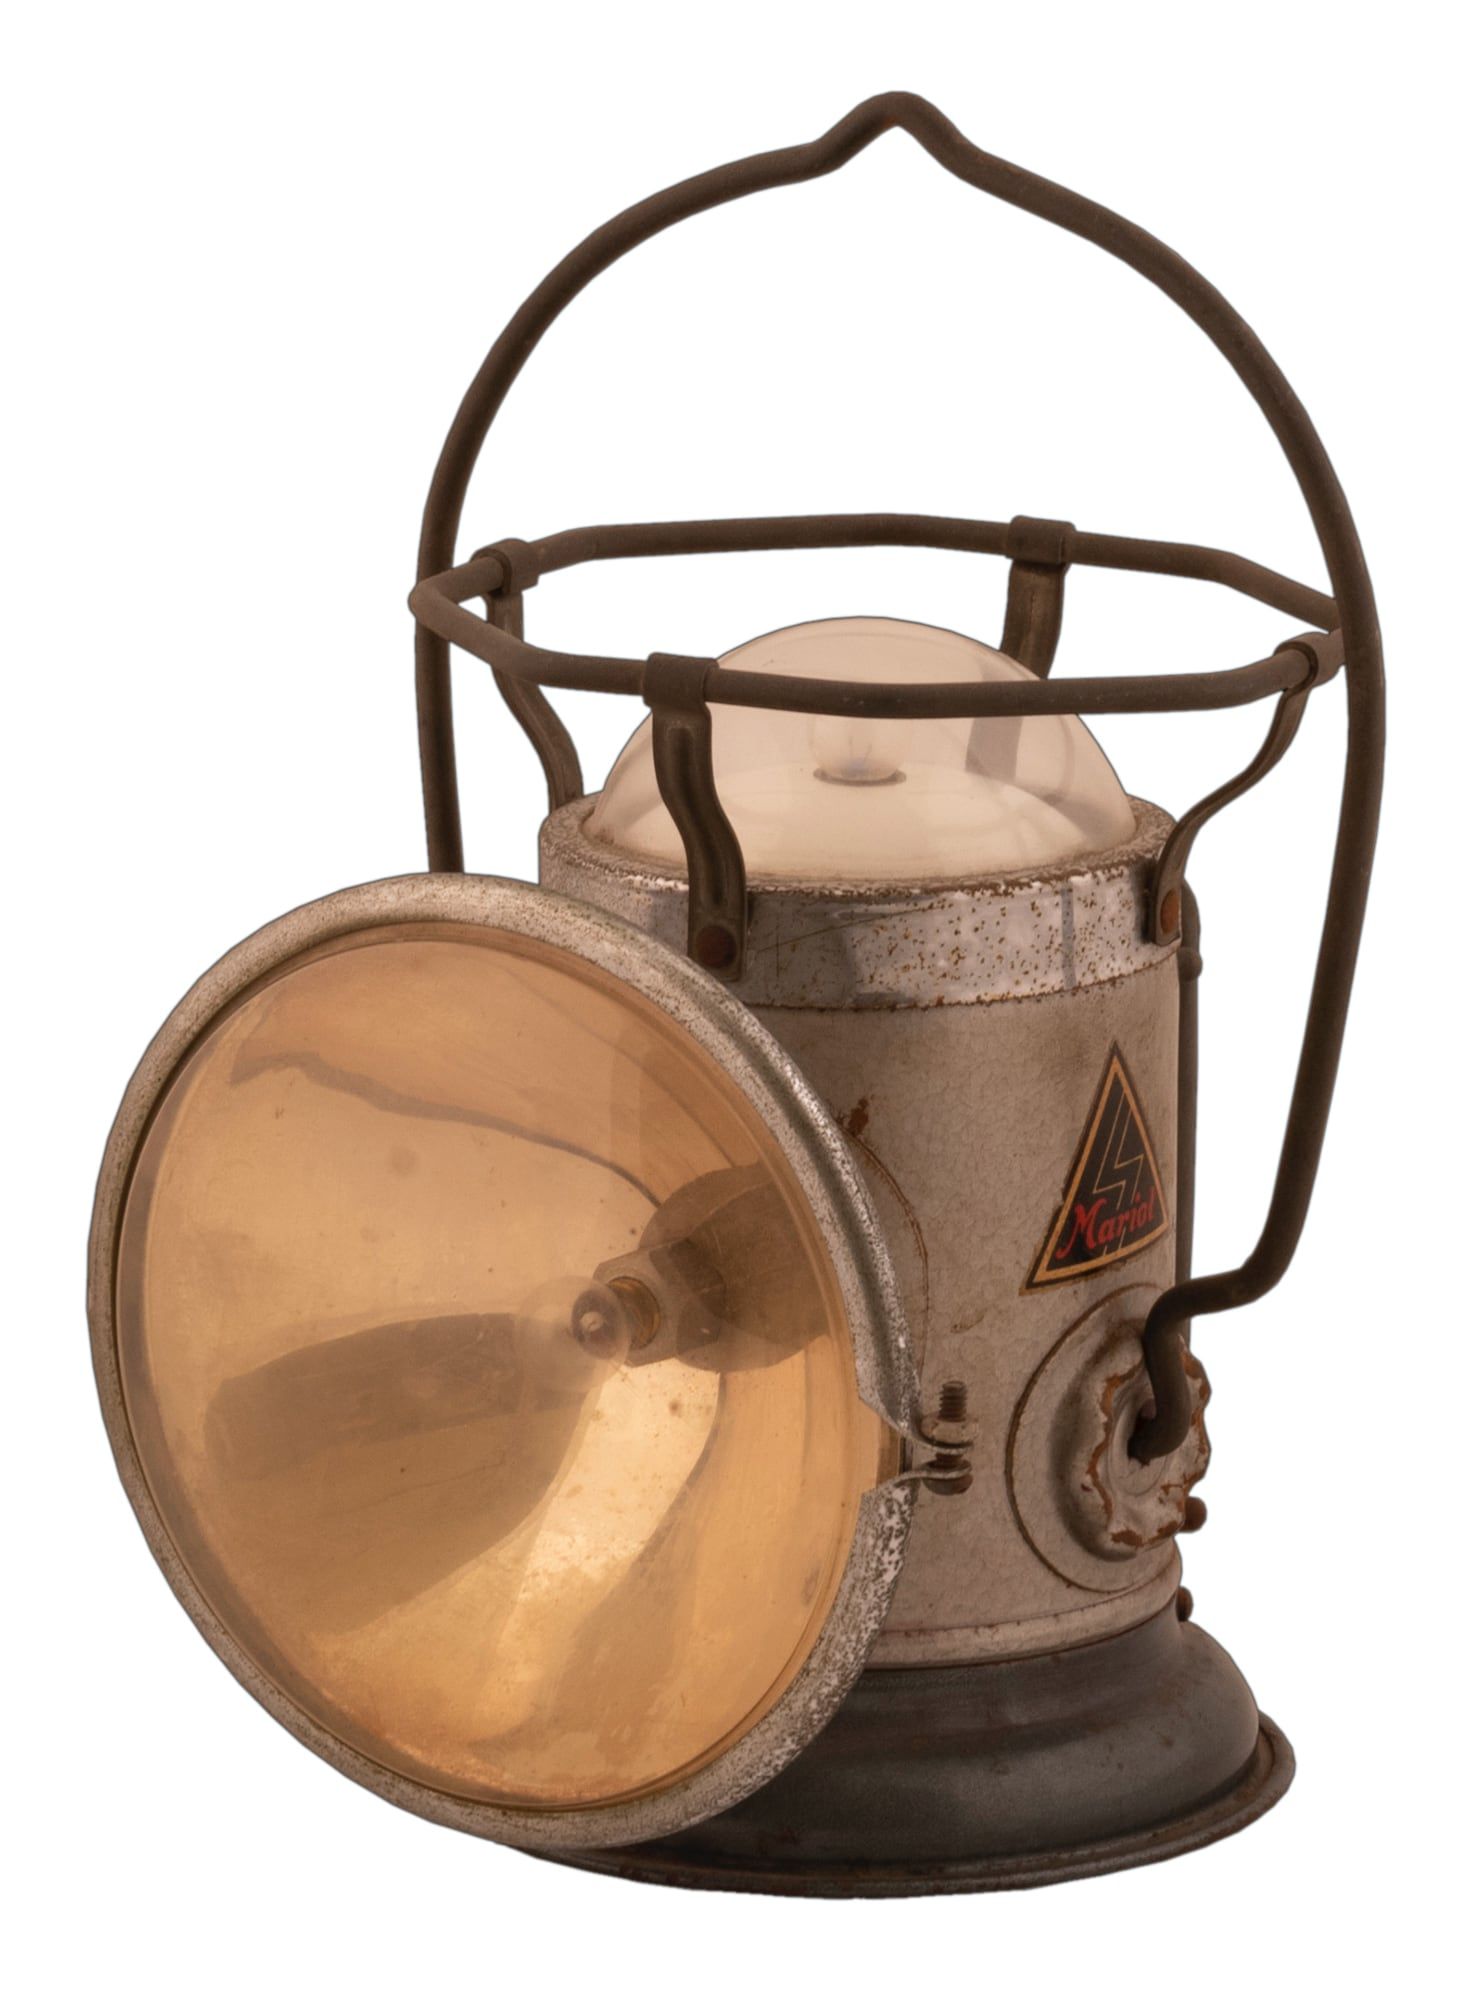 Jailor's Lamp